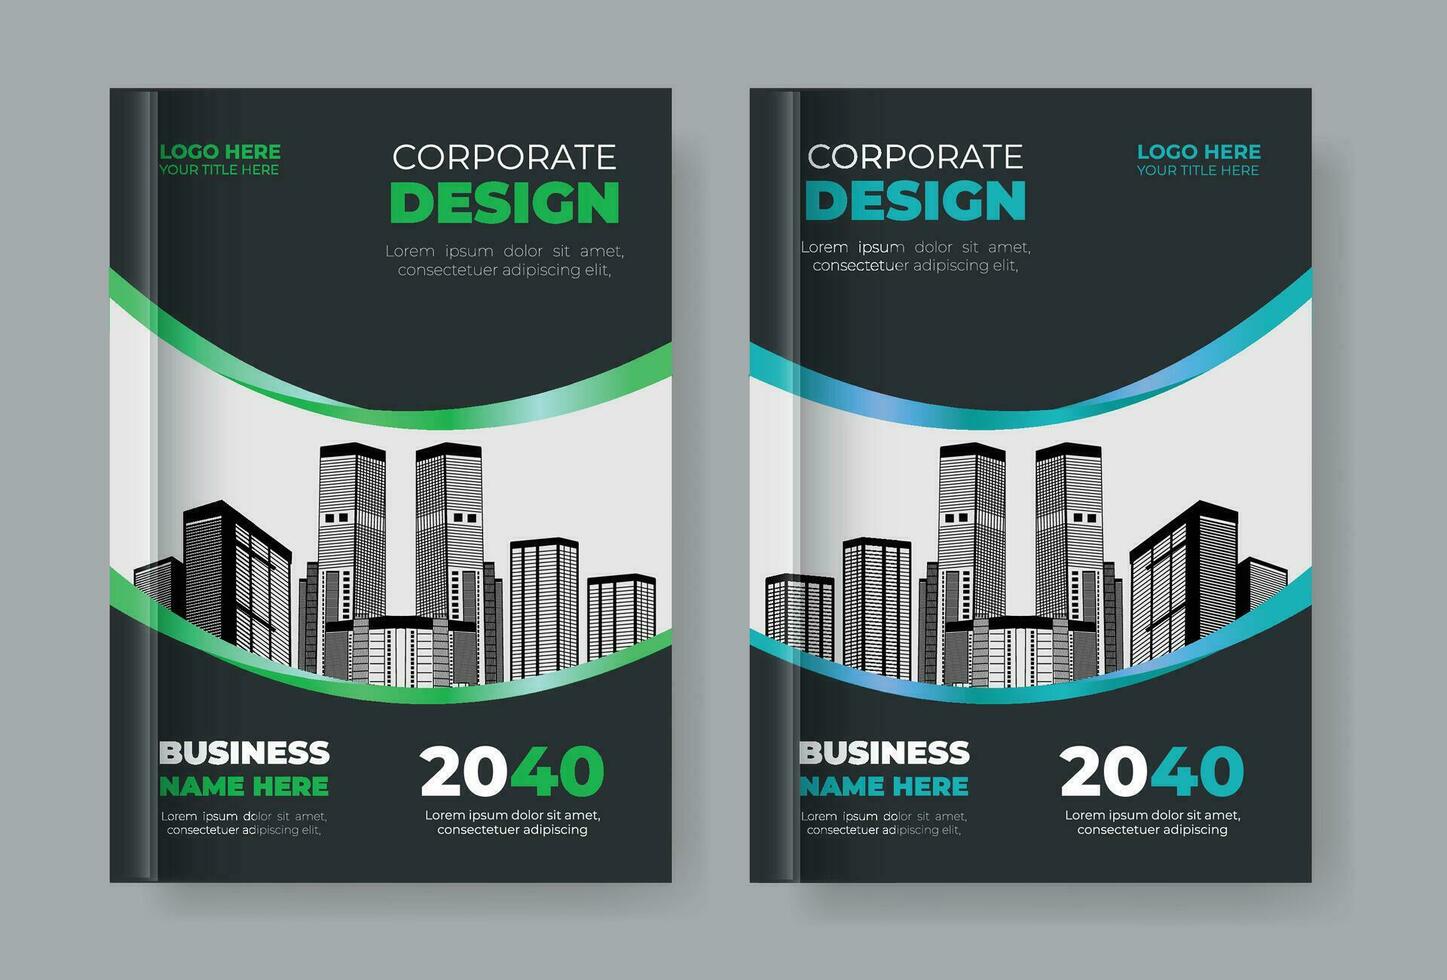 Corporate Cover Design Template in A4 size, annual report, poster, Corporate Presentation, magazine cover, business cover design vector